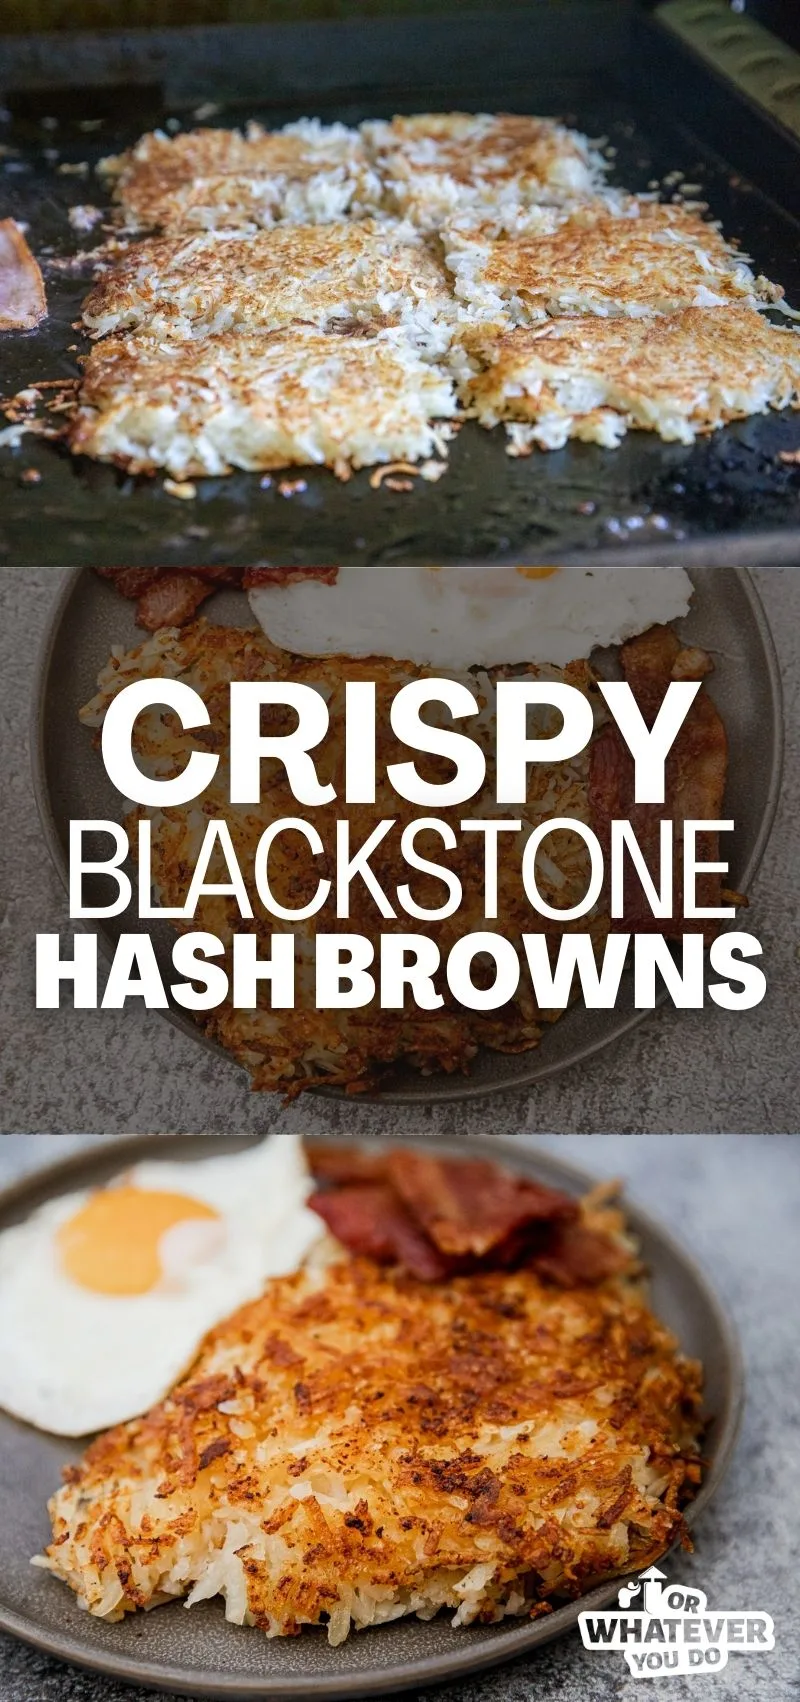 Crispy Blackstone Hash Browns